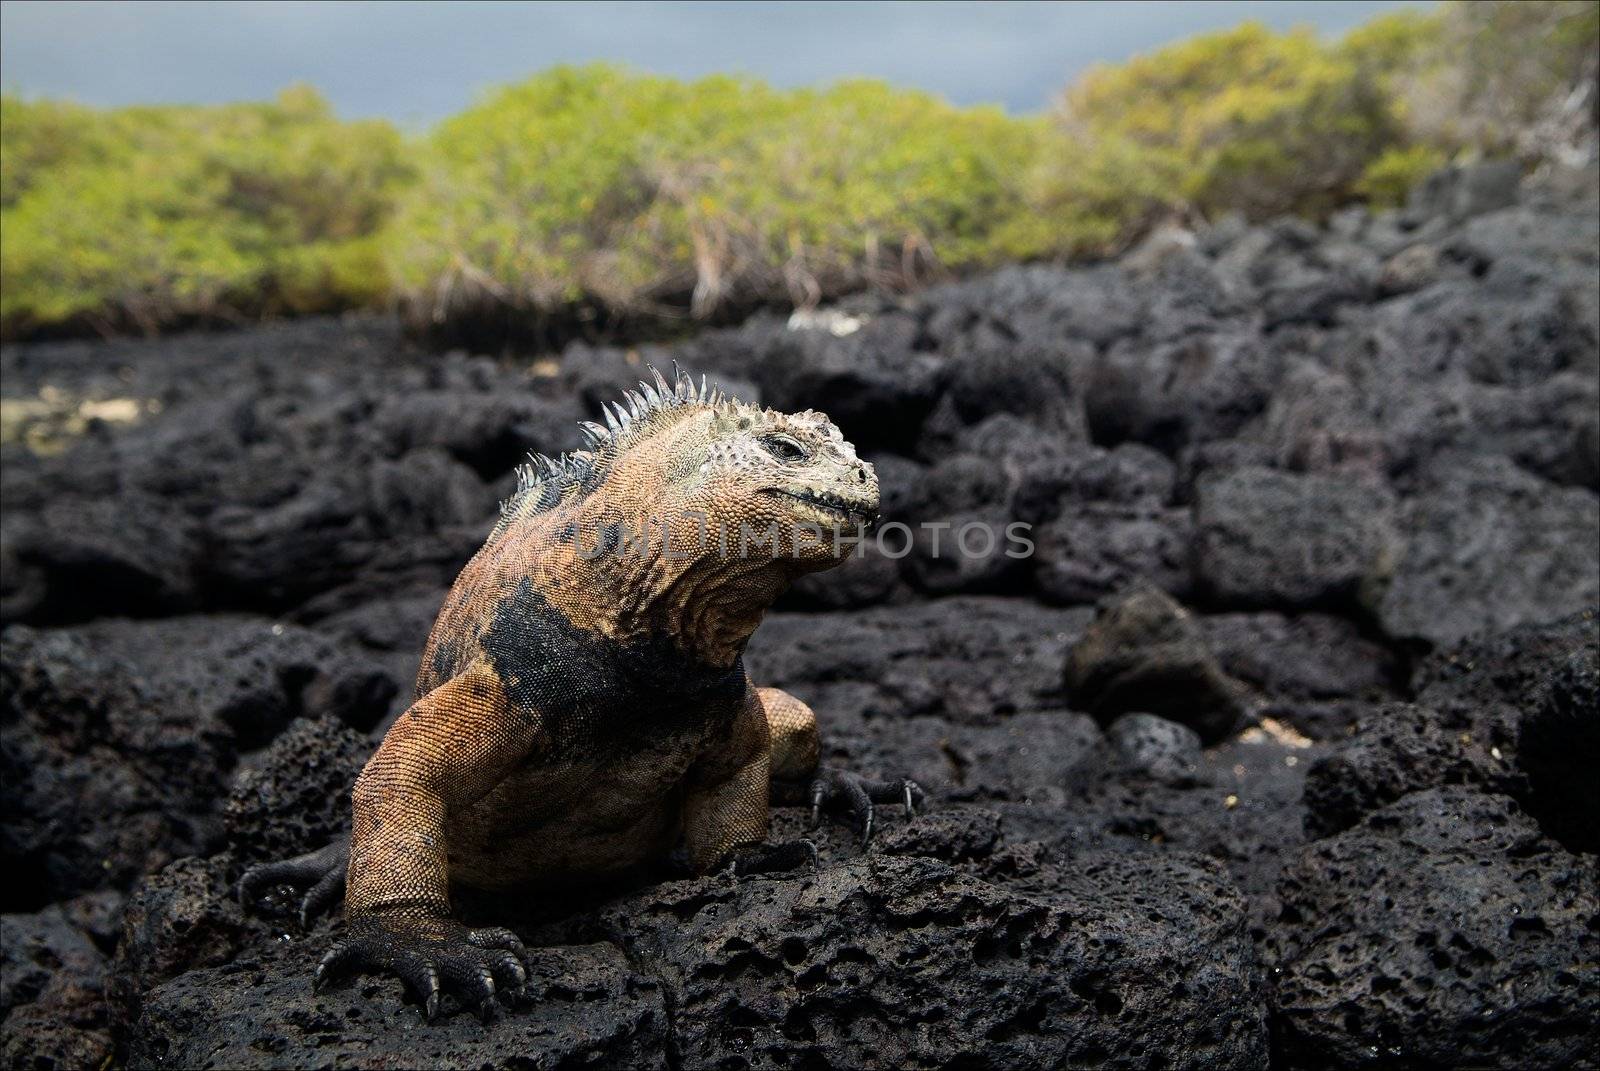 The marine  iguana poses. by SURZ